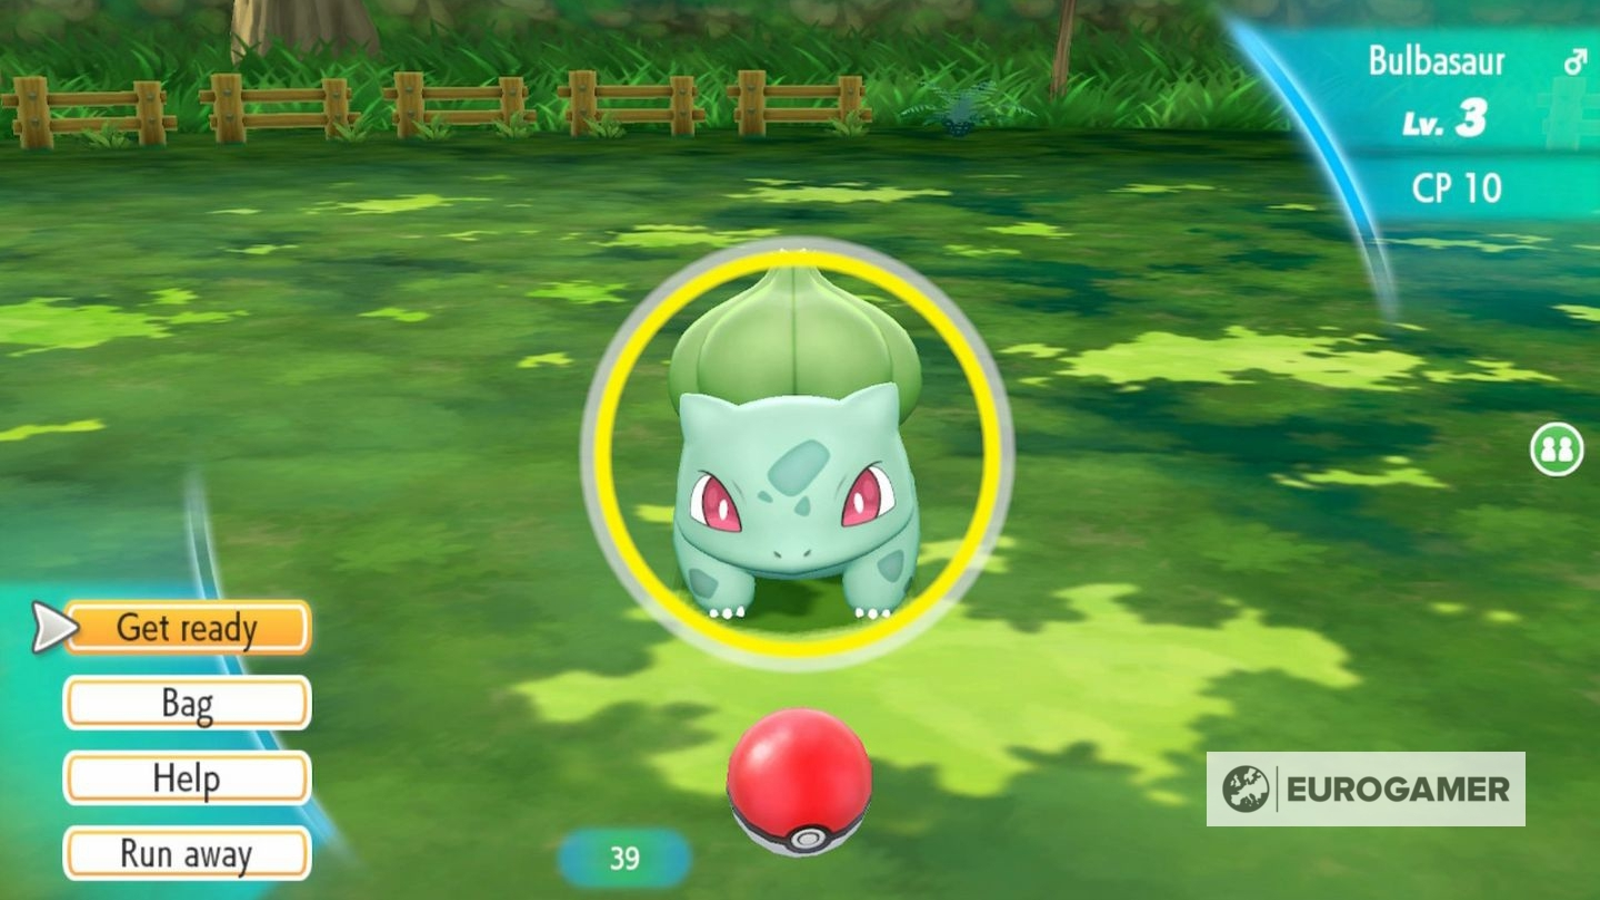 Shiny Bulbasaur Nearly Perfect-Pokémon GO - TapTap